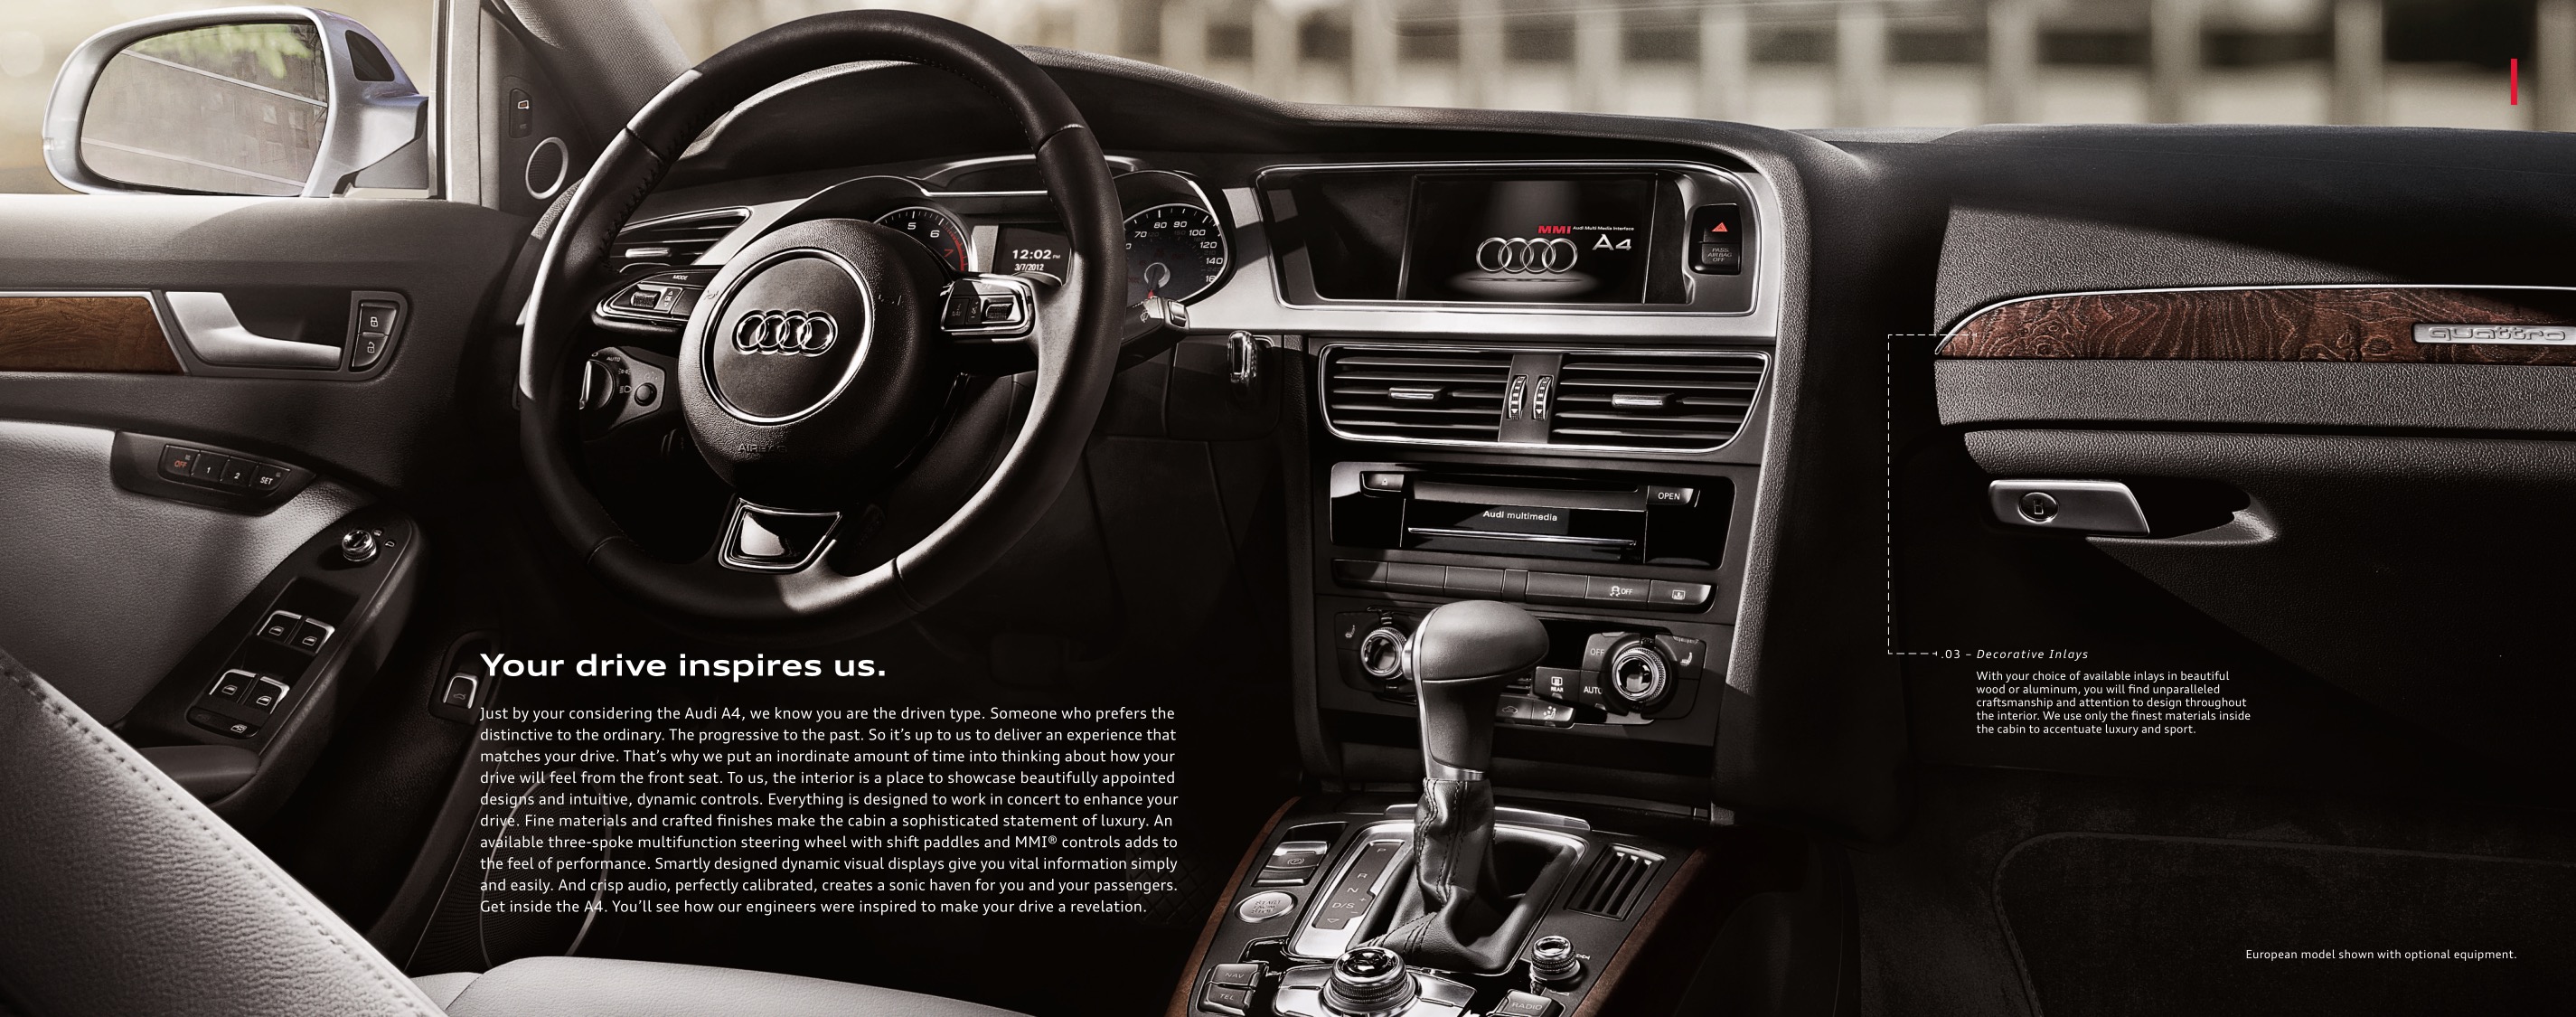 2013 Audi A4 Brochure Page 11